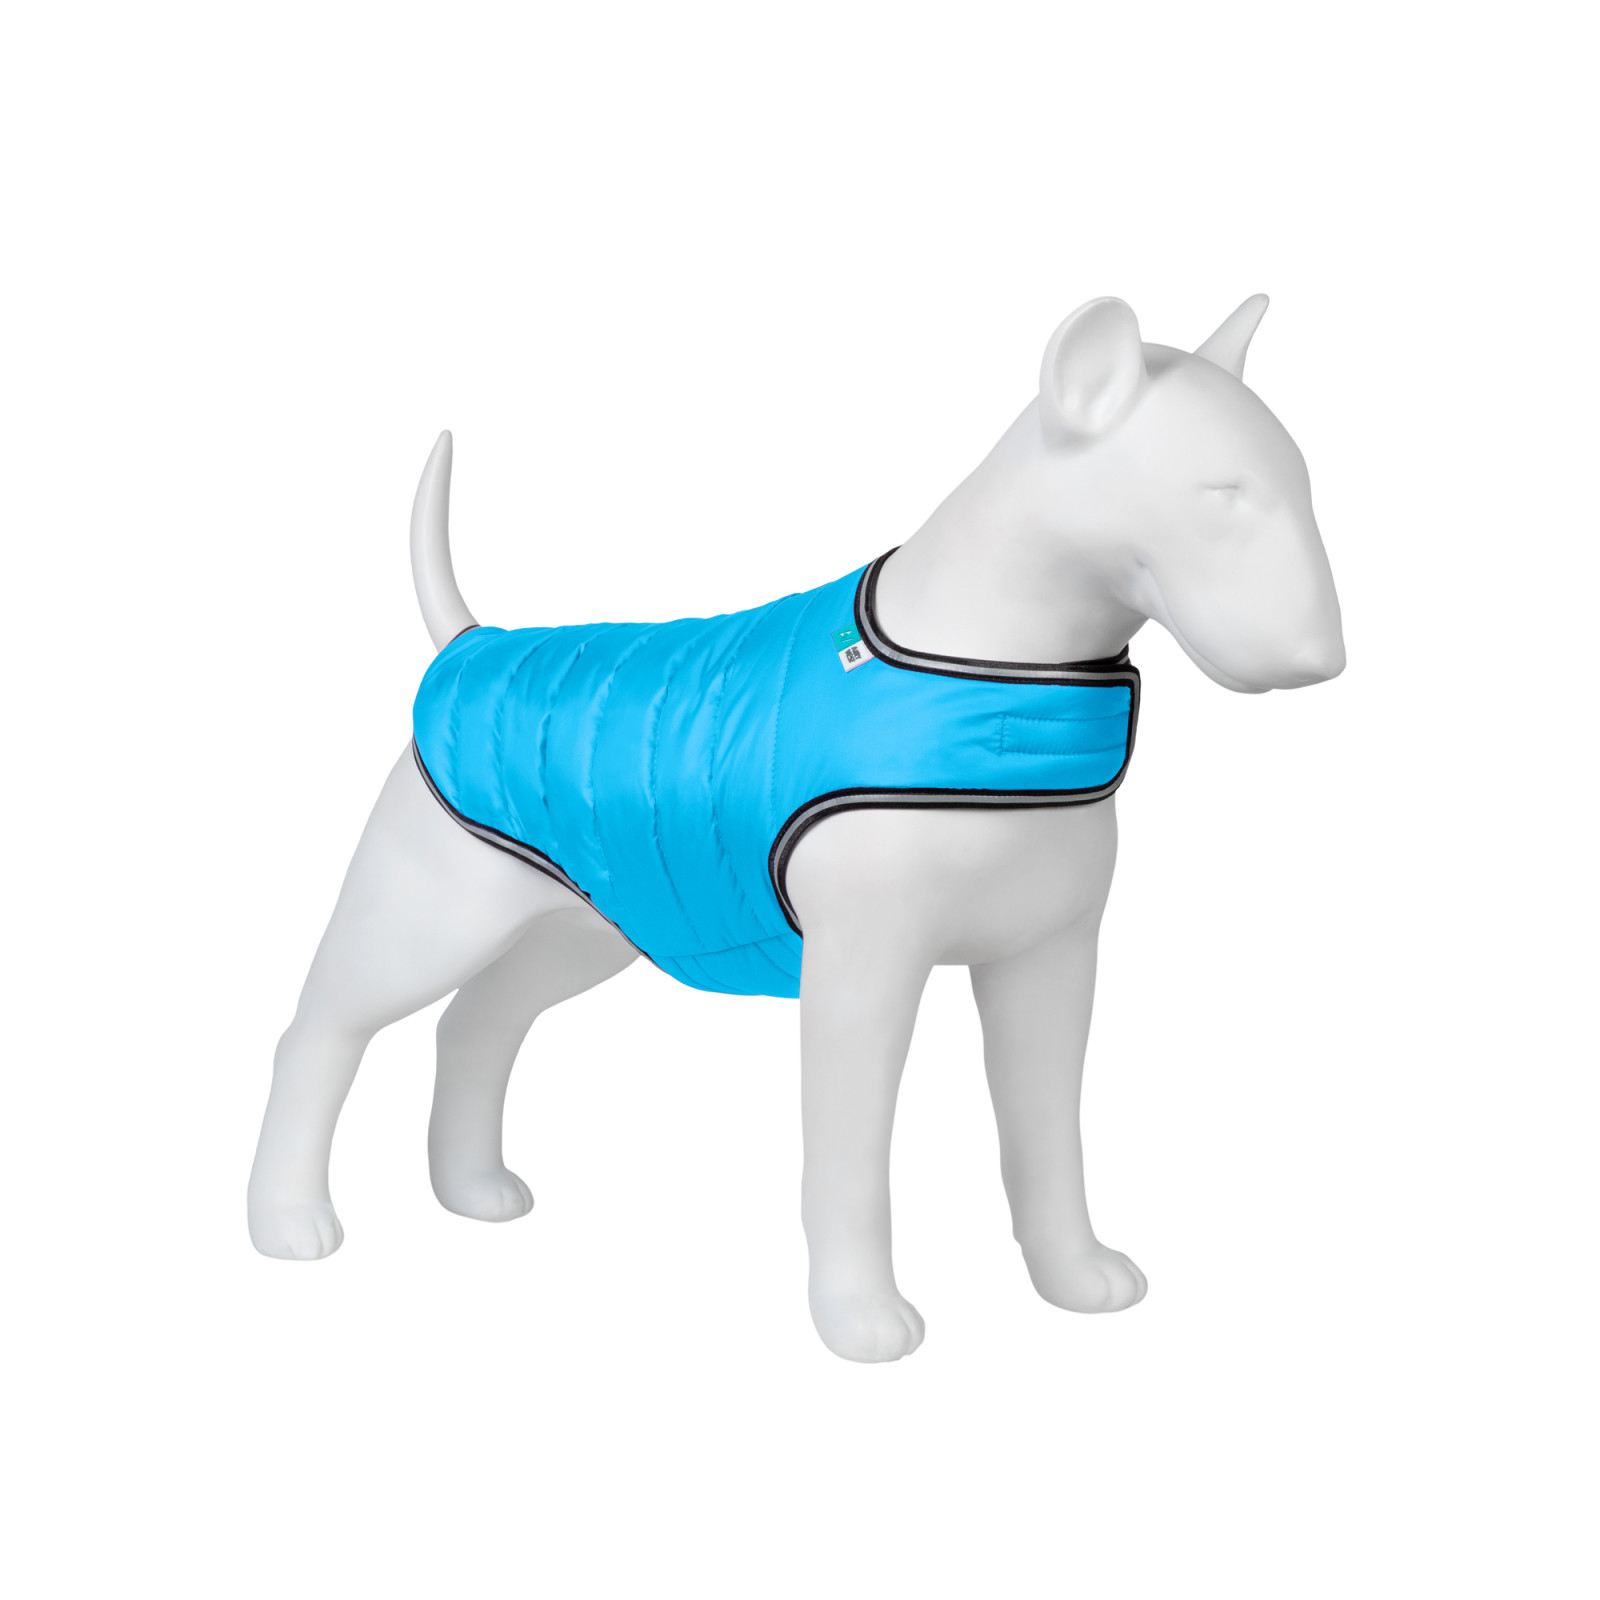 Курточка для животных Airy Vest XL салатовая (15455)